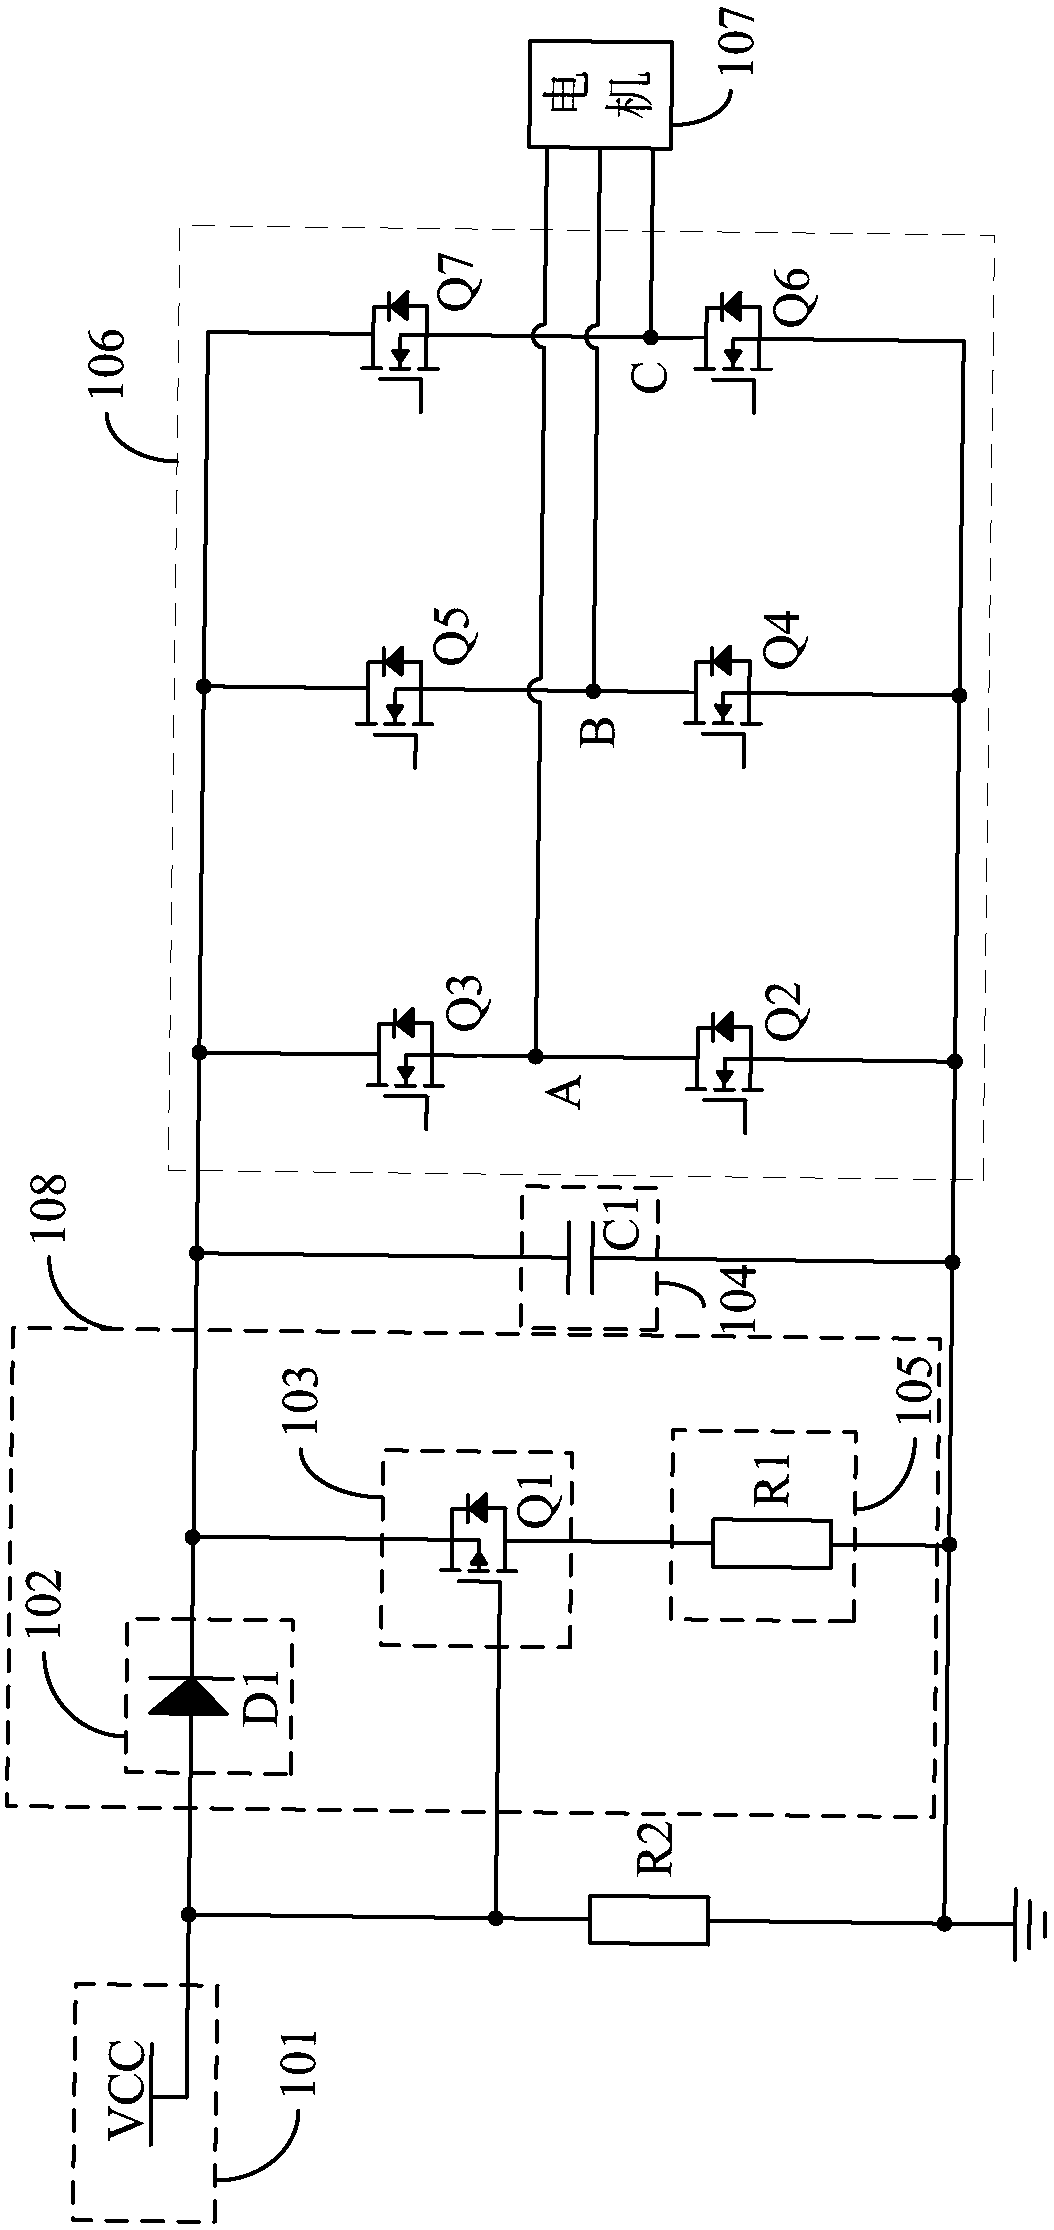 Motor brake circuit and actuator